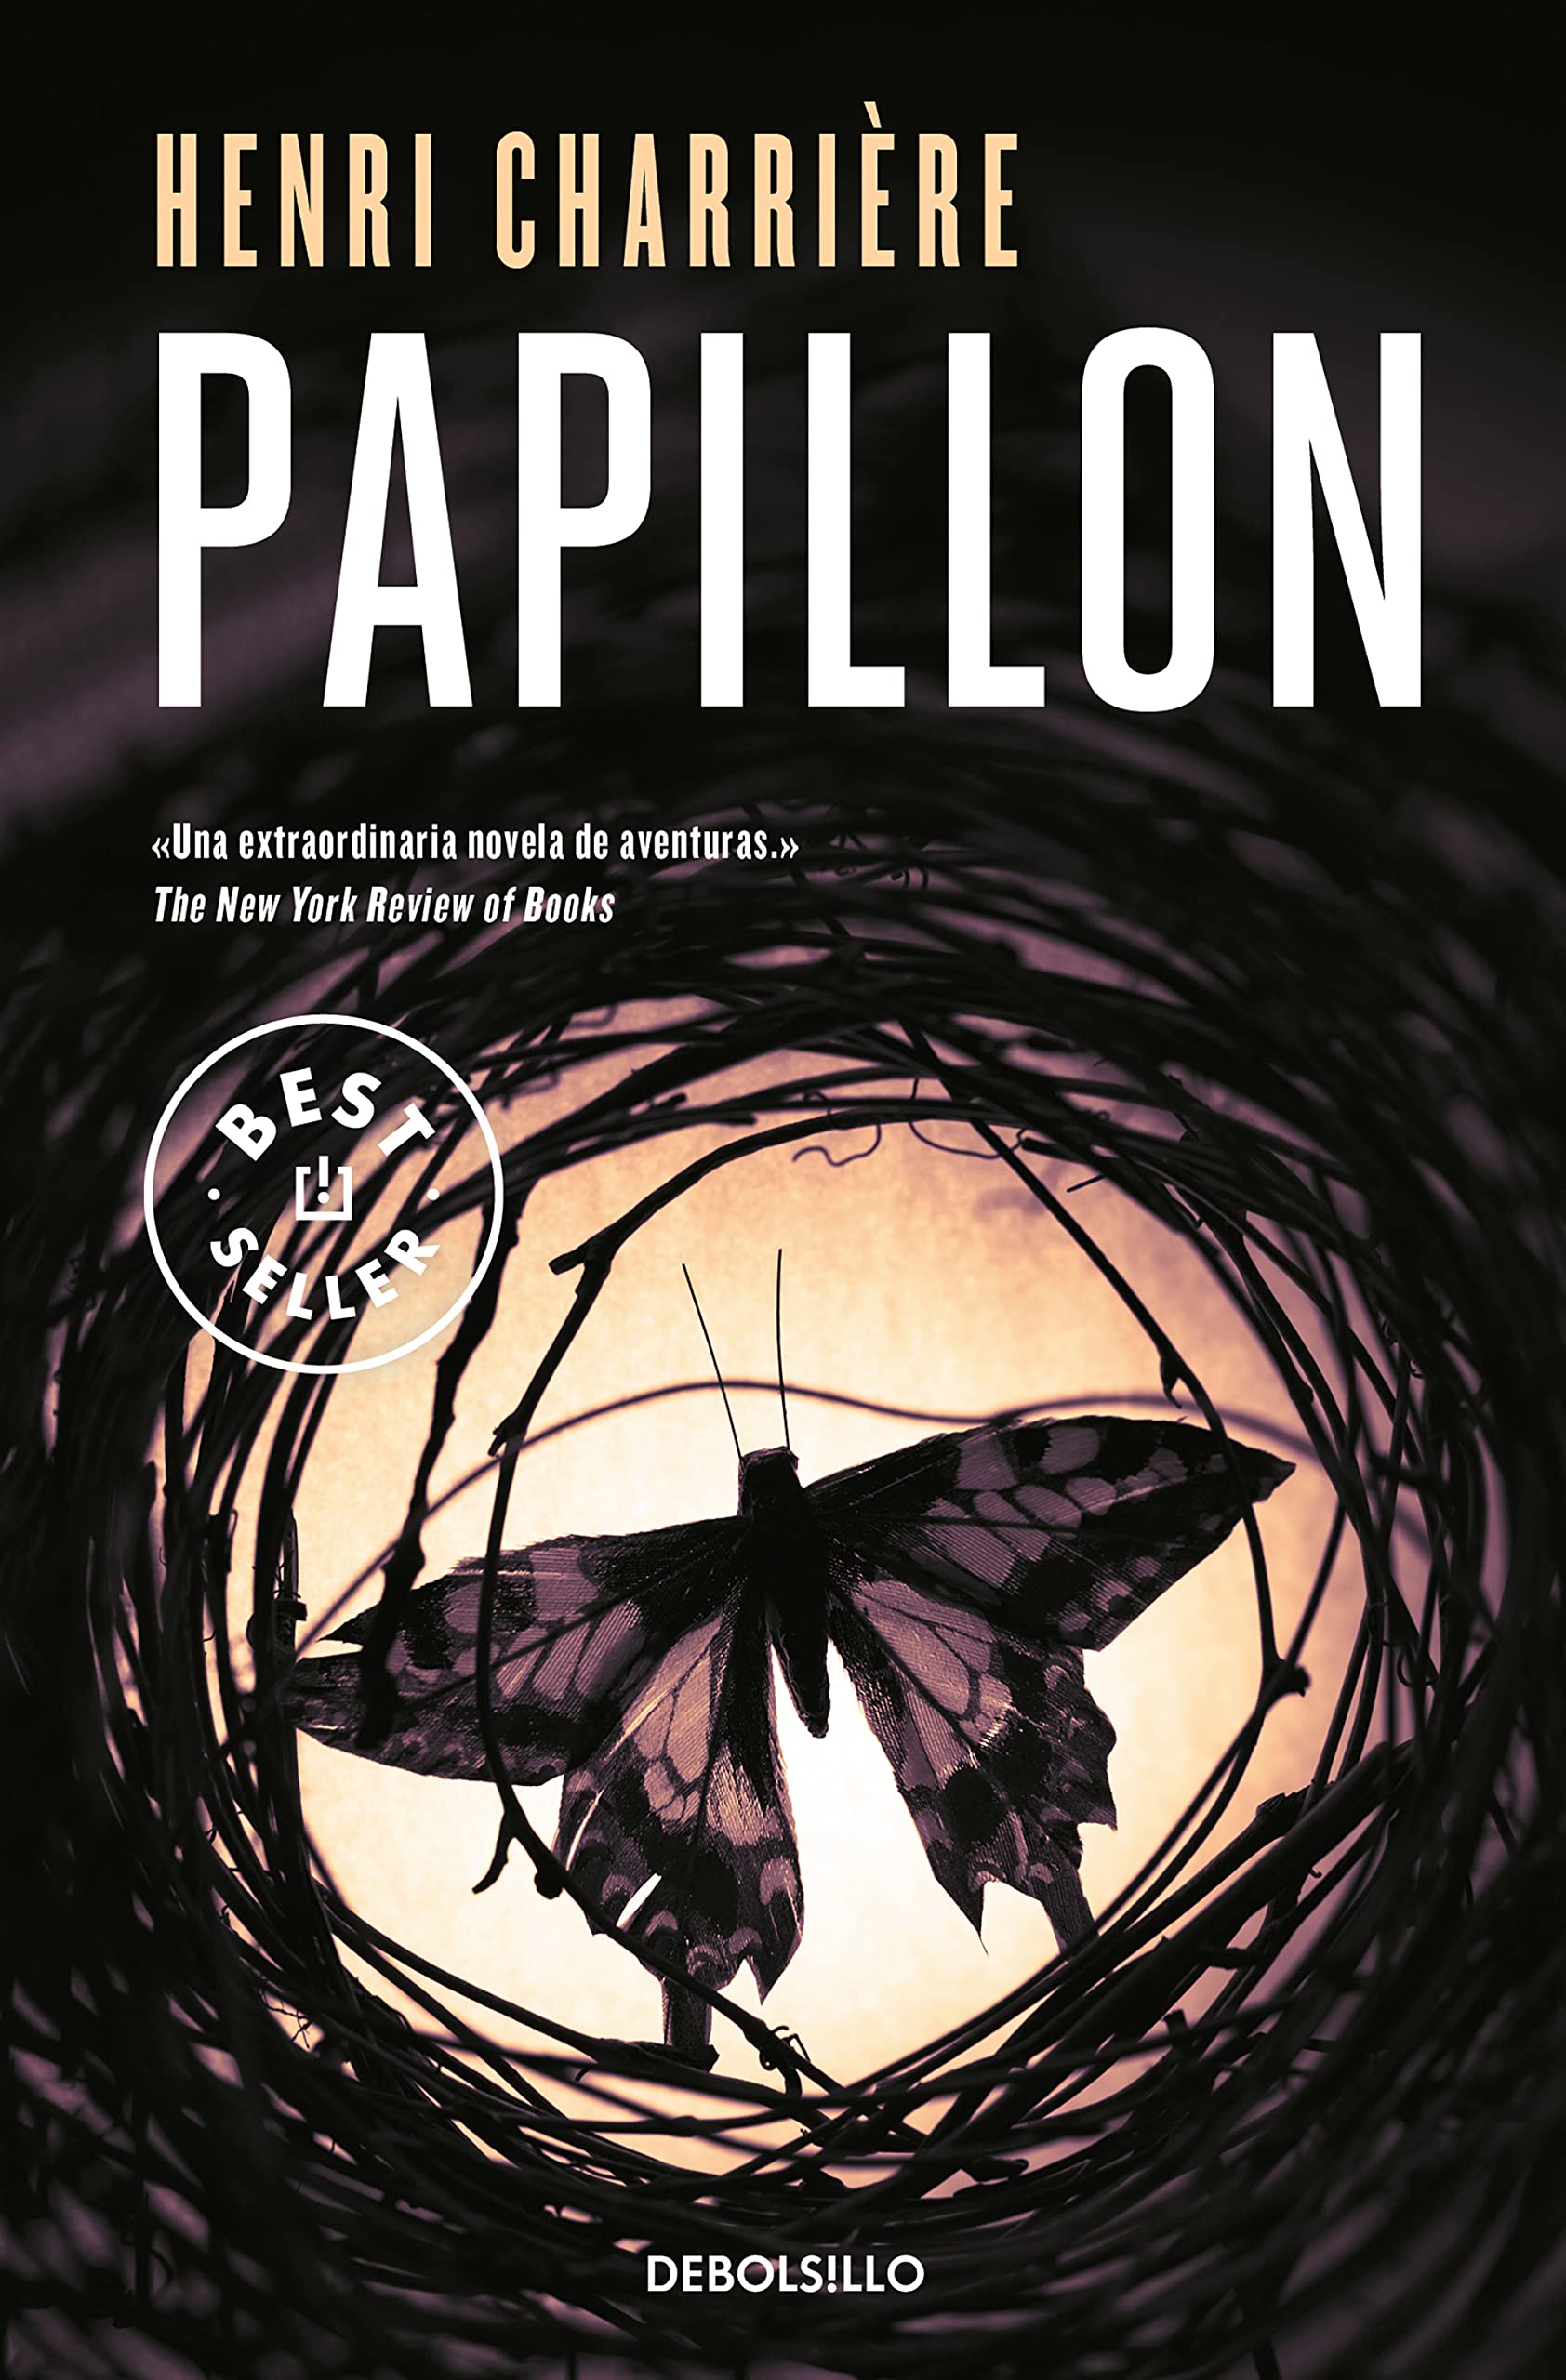 Henri Charrière: Papillon (Paperback, Español language, 2018, DeBolsillo)